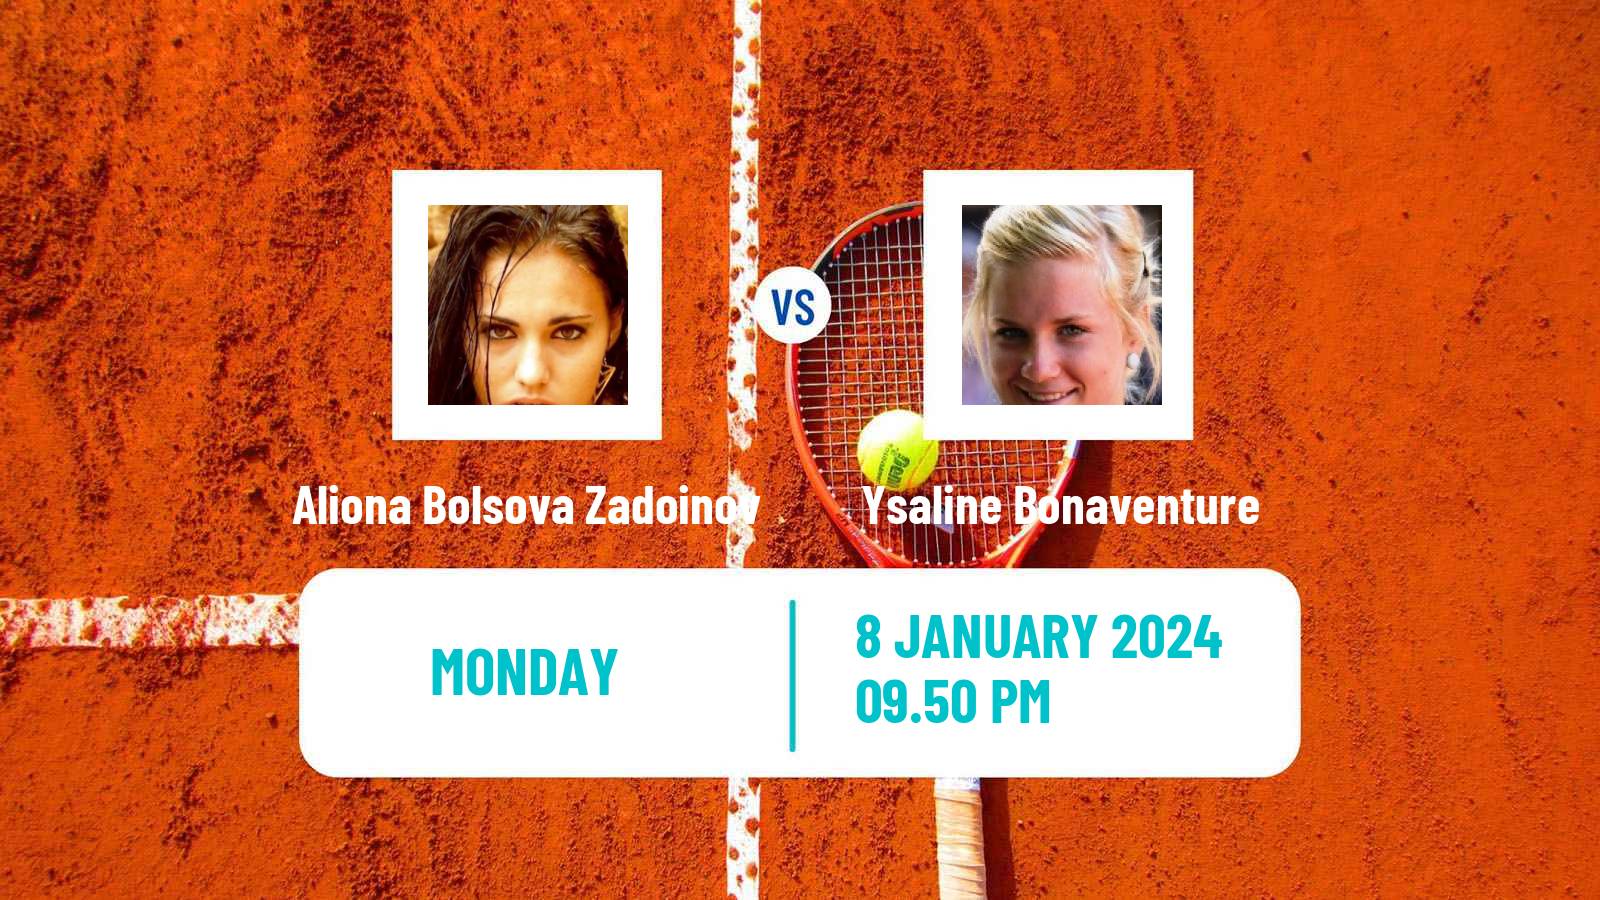 Tennis WTA Australian Open Aliona Bolsova Zadoinov - Ysaline Bonaventure